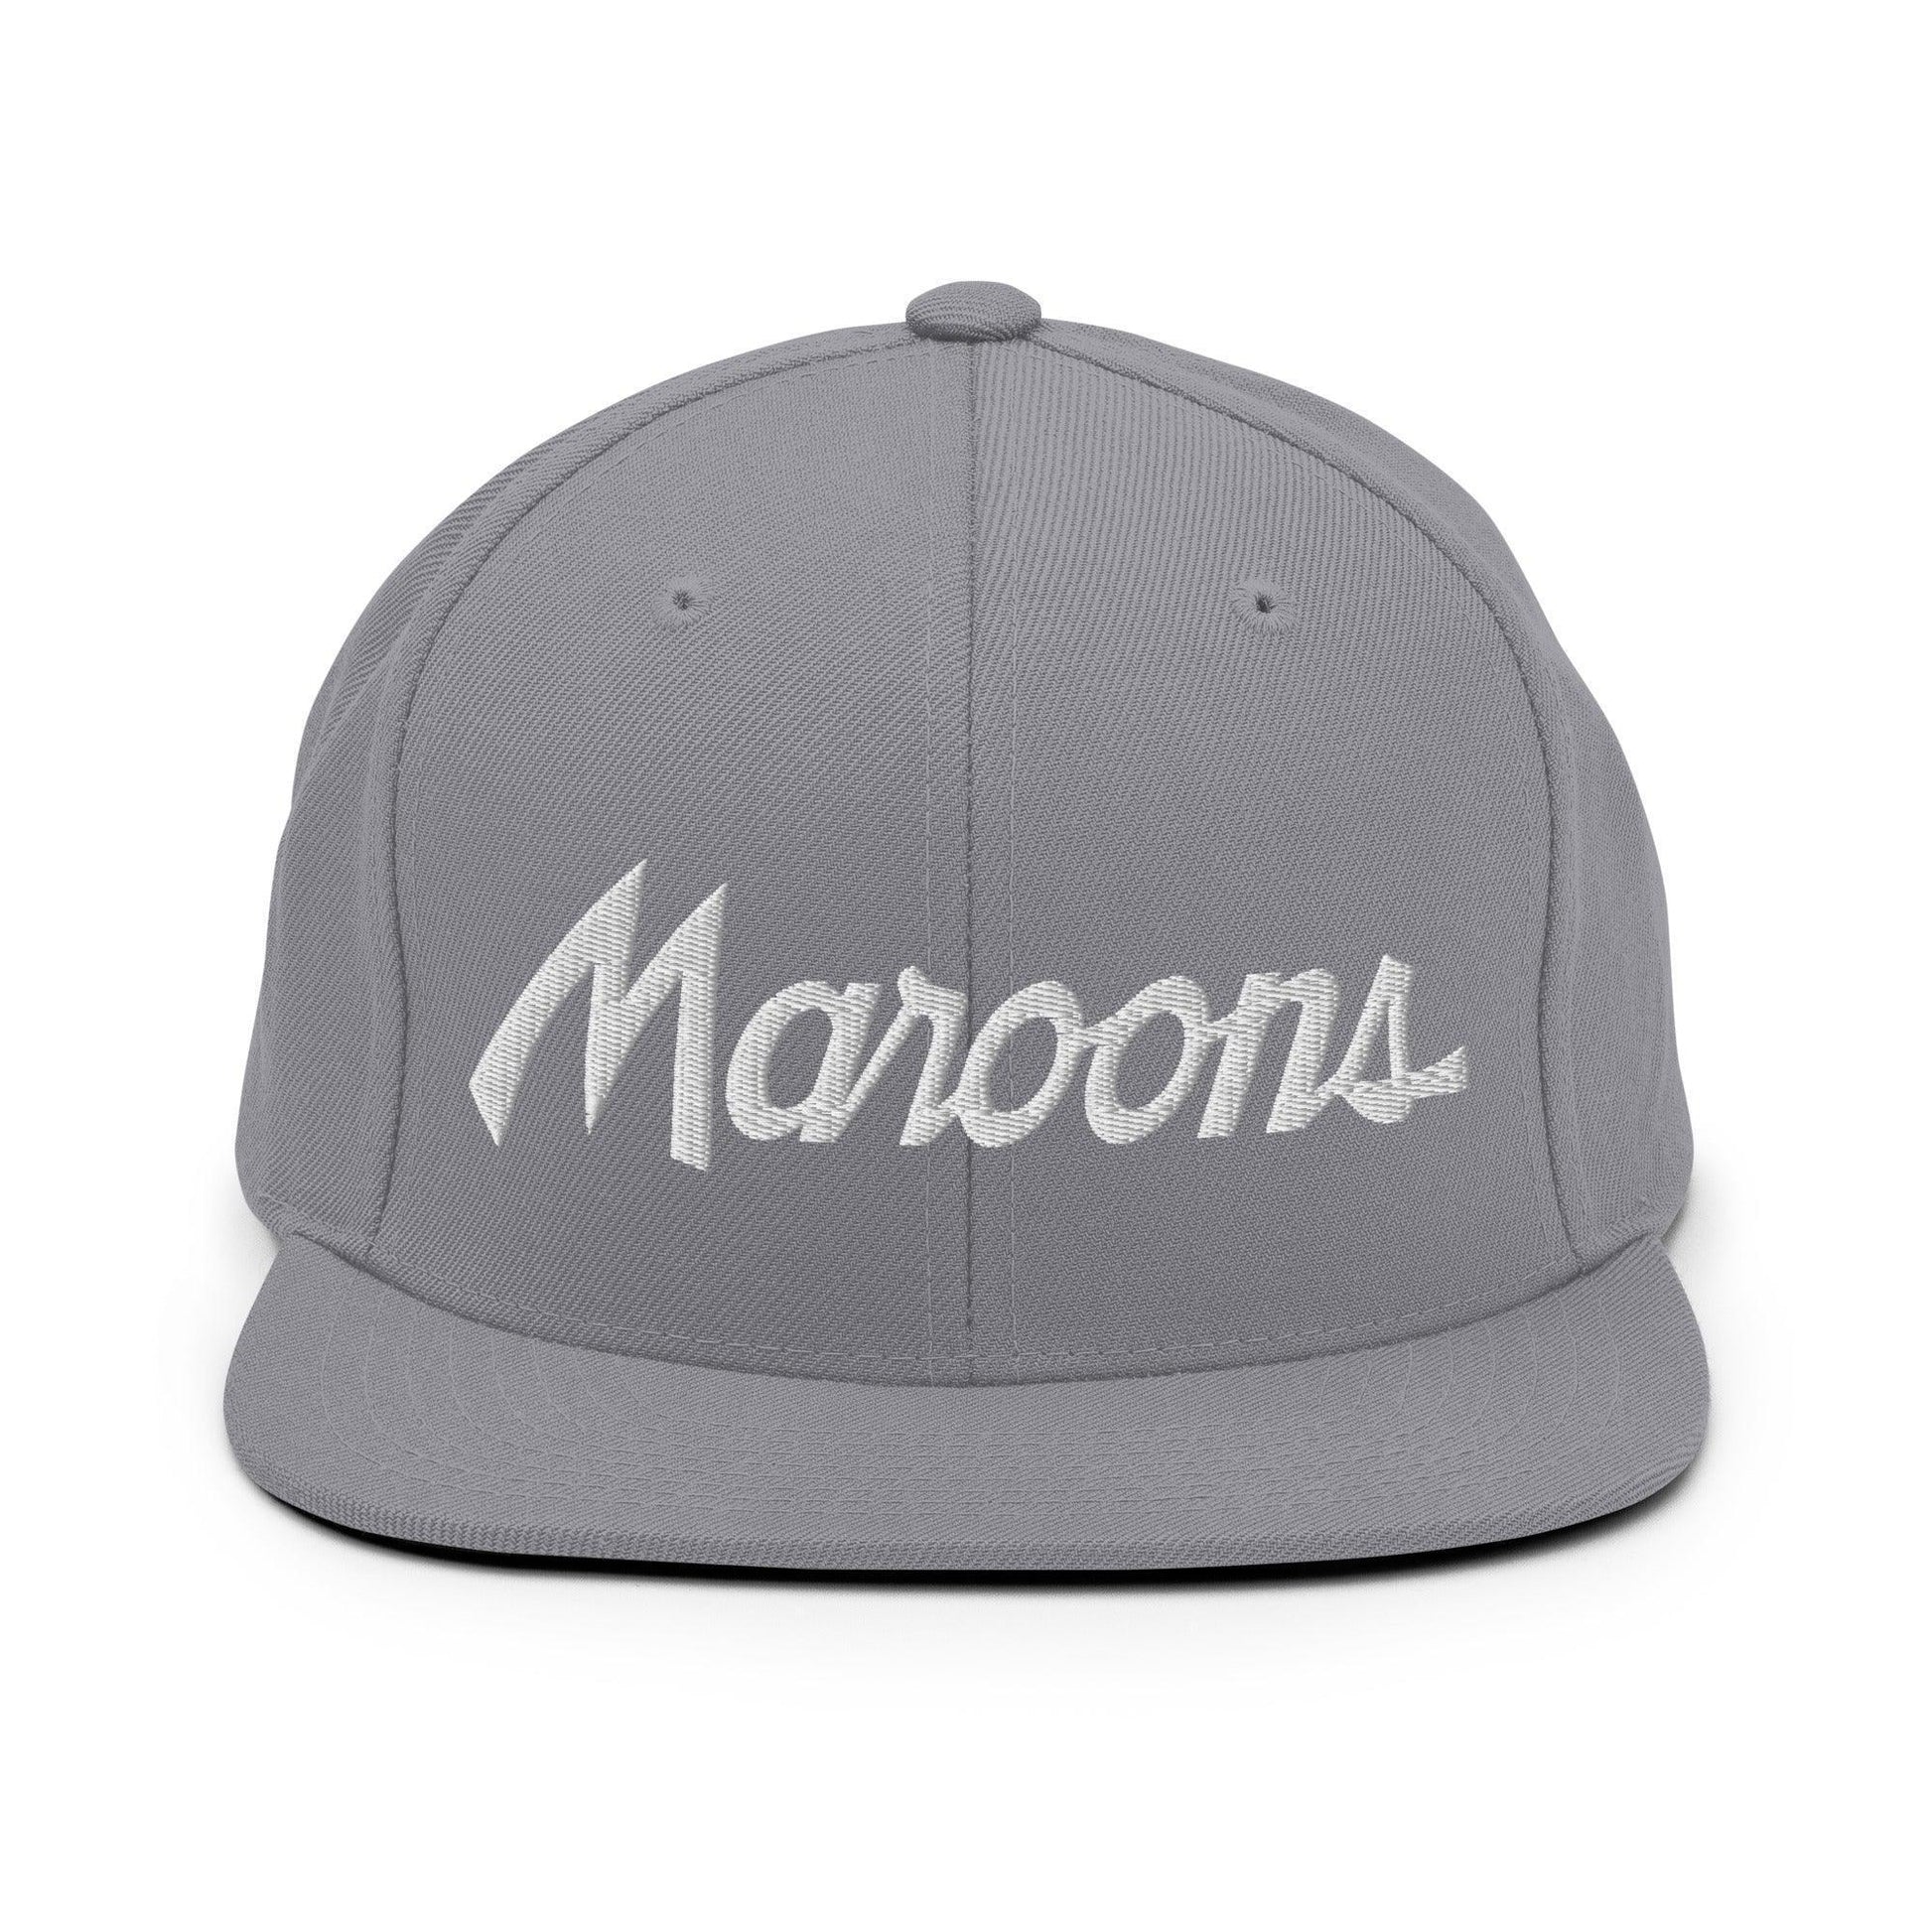 Maroons School Mascot Script Snapback Hat Silver